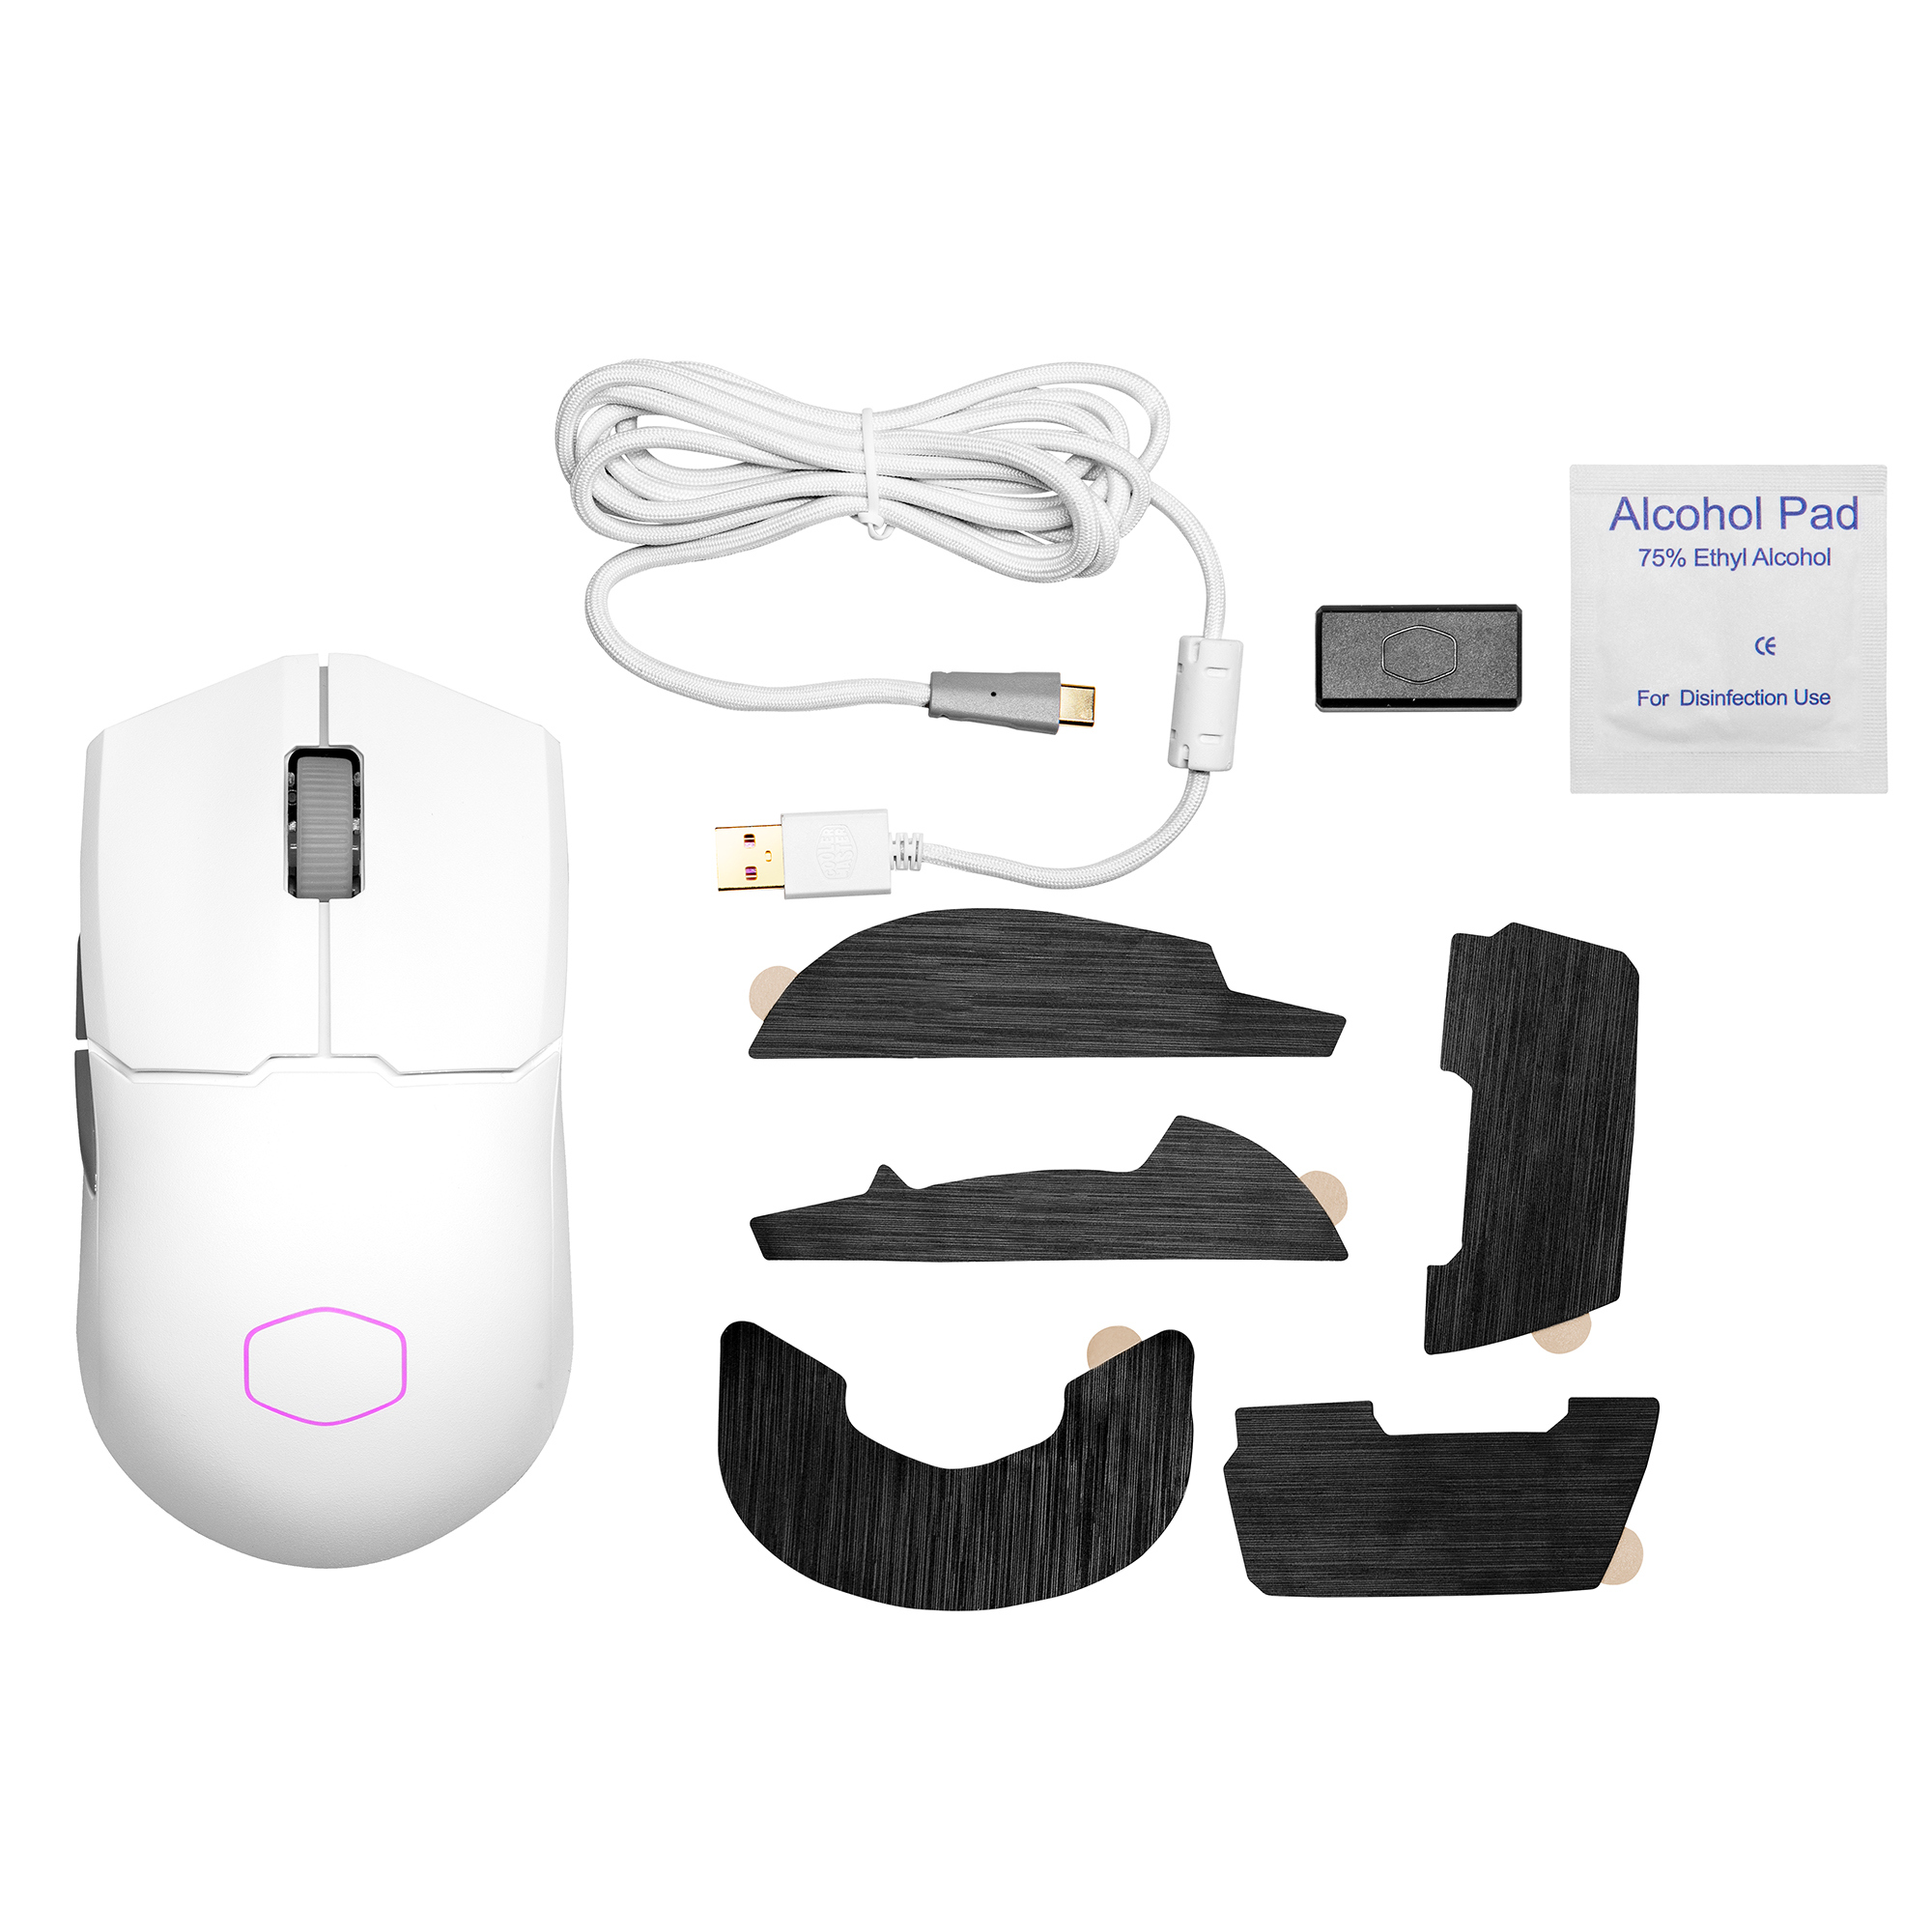 Cooler Master - Cooler Master MM712 Hybrid Wireless Ultra Light RGB Gaming Mouse - White